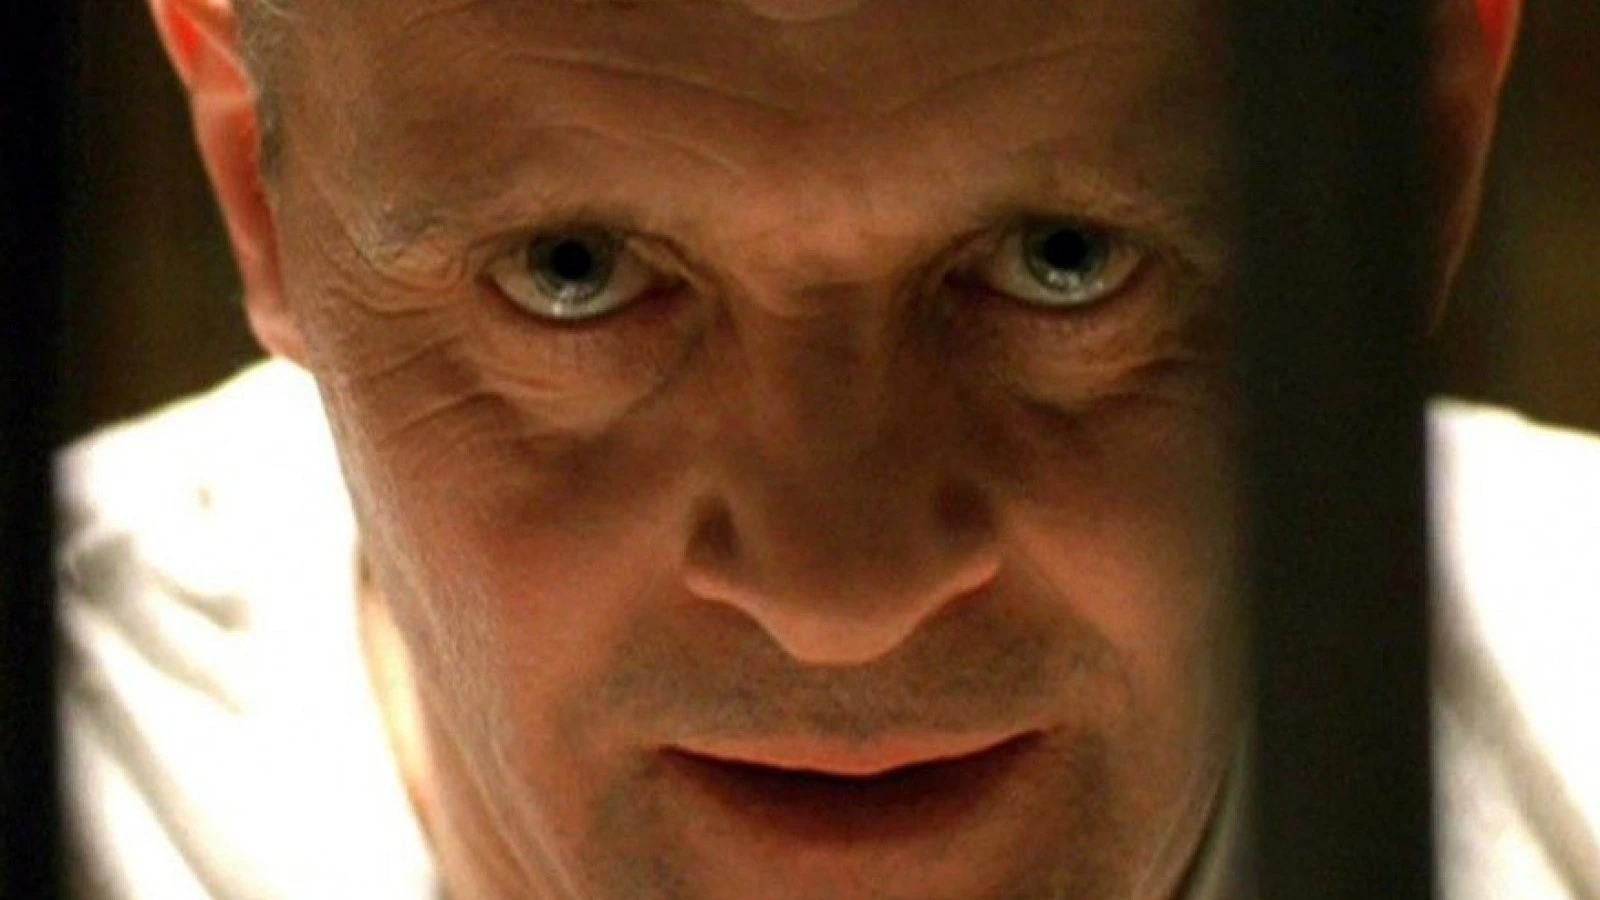 Hannibal Lecter staring directly at the camera